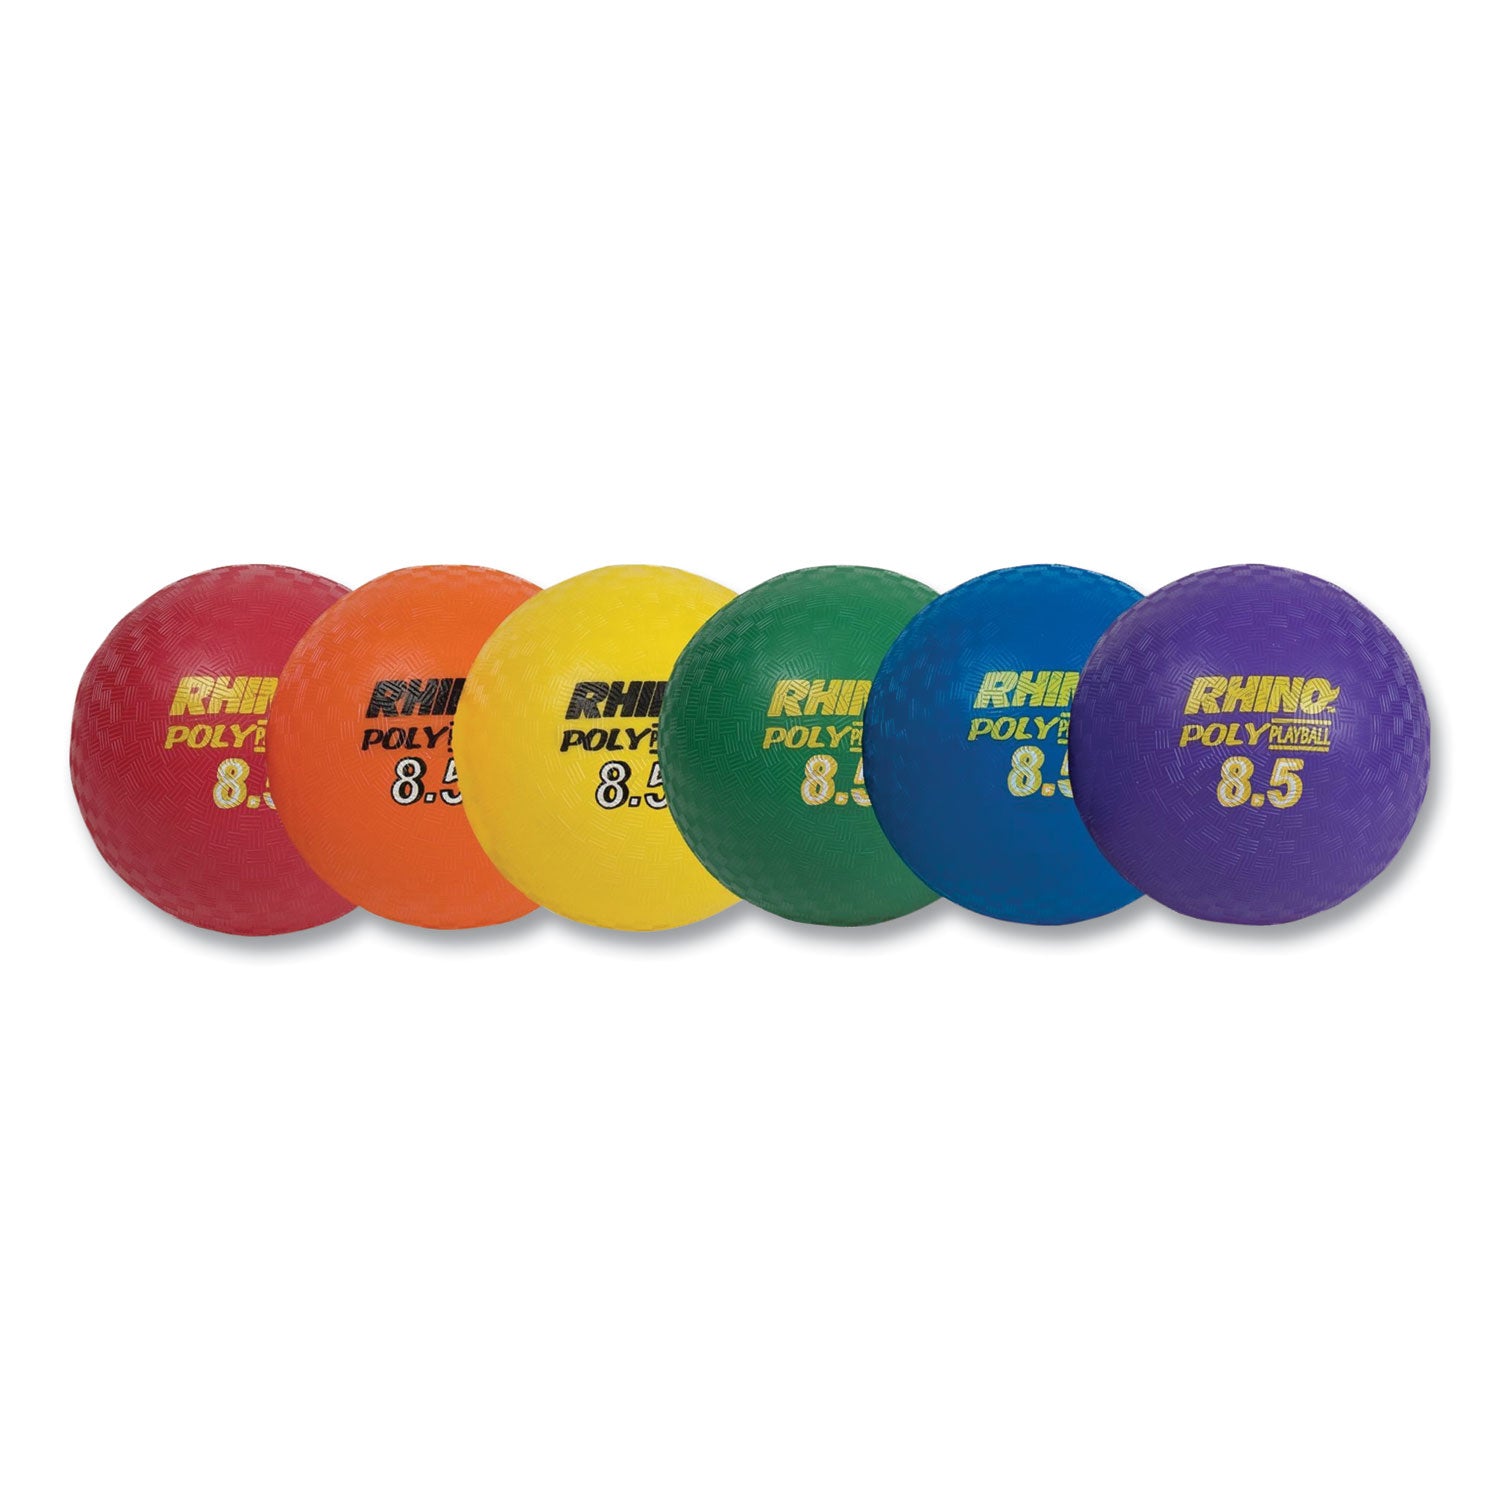 Rhino Playground Ball Set, 8.5" Diameter, Assorted Colors, 6/Set - 